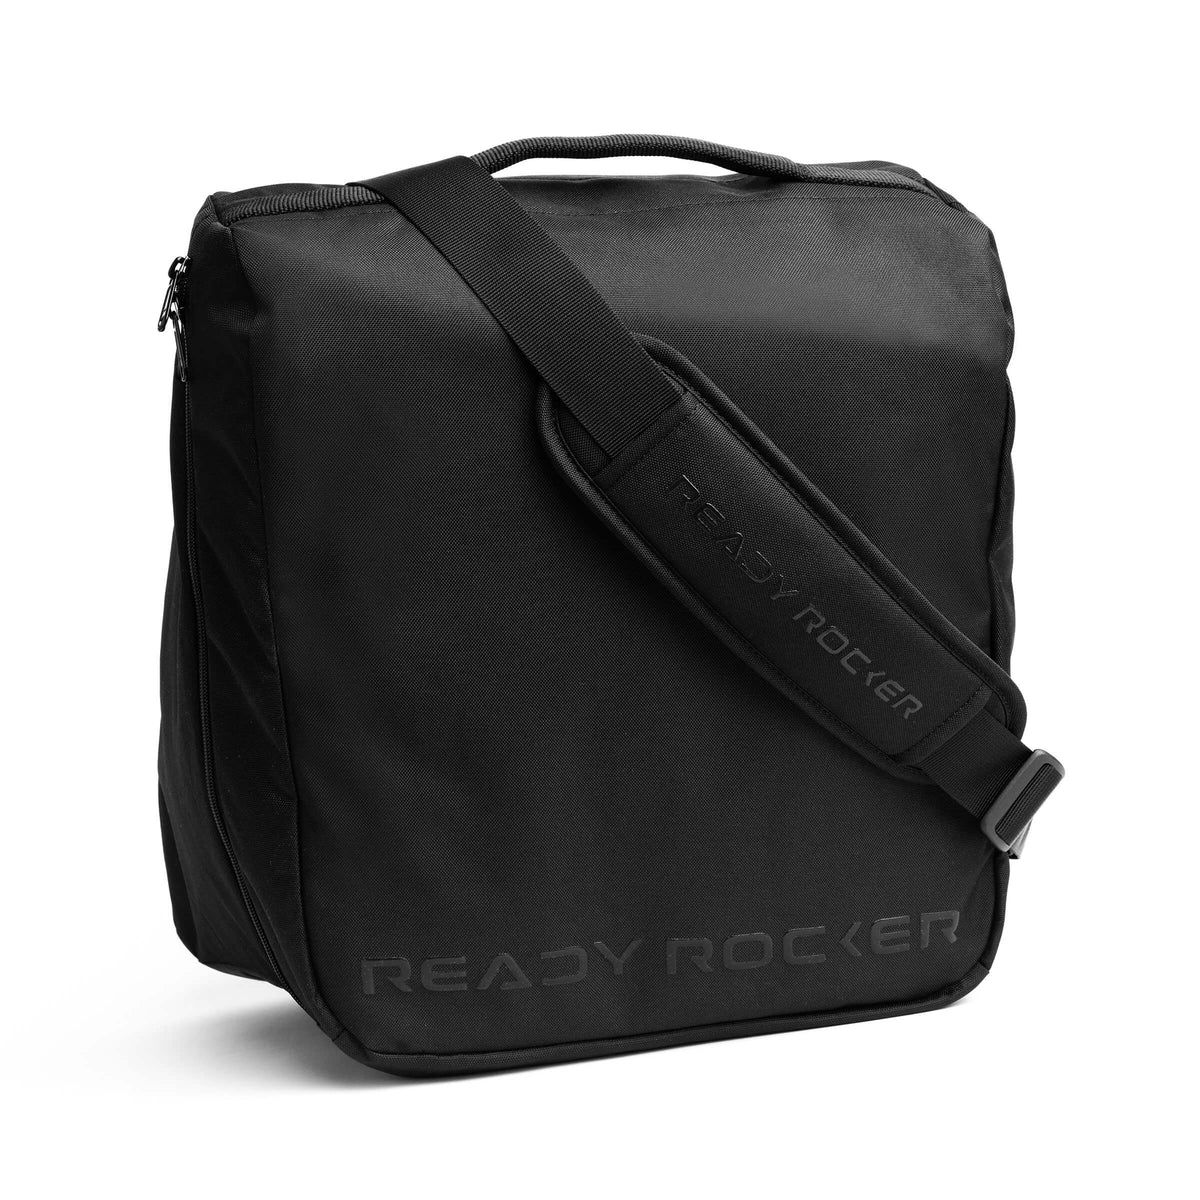 Travel Bag | Ready Rocker®